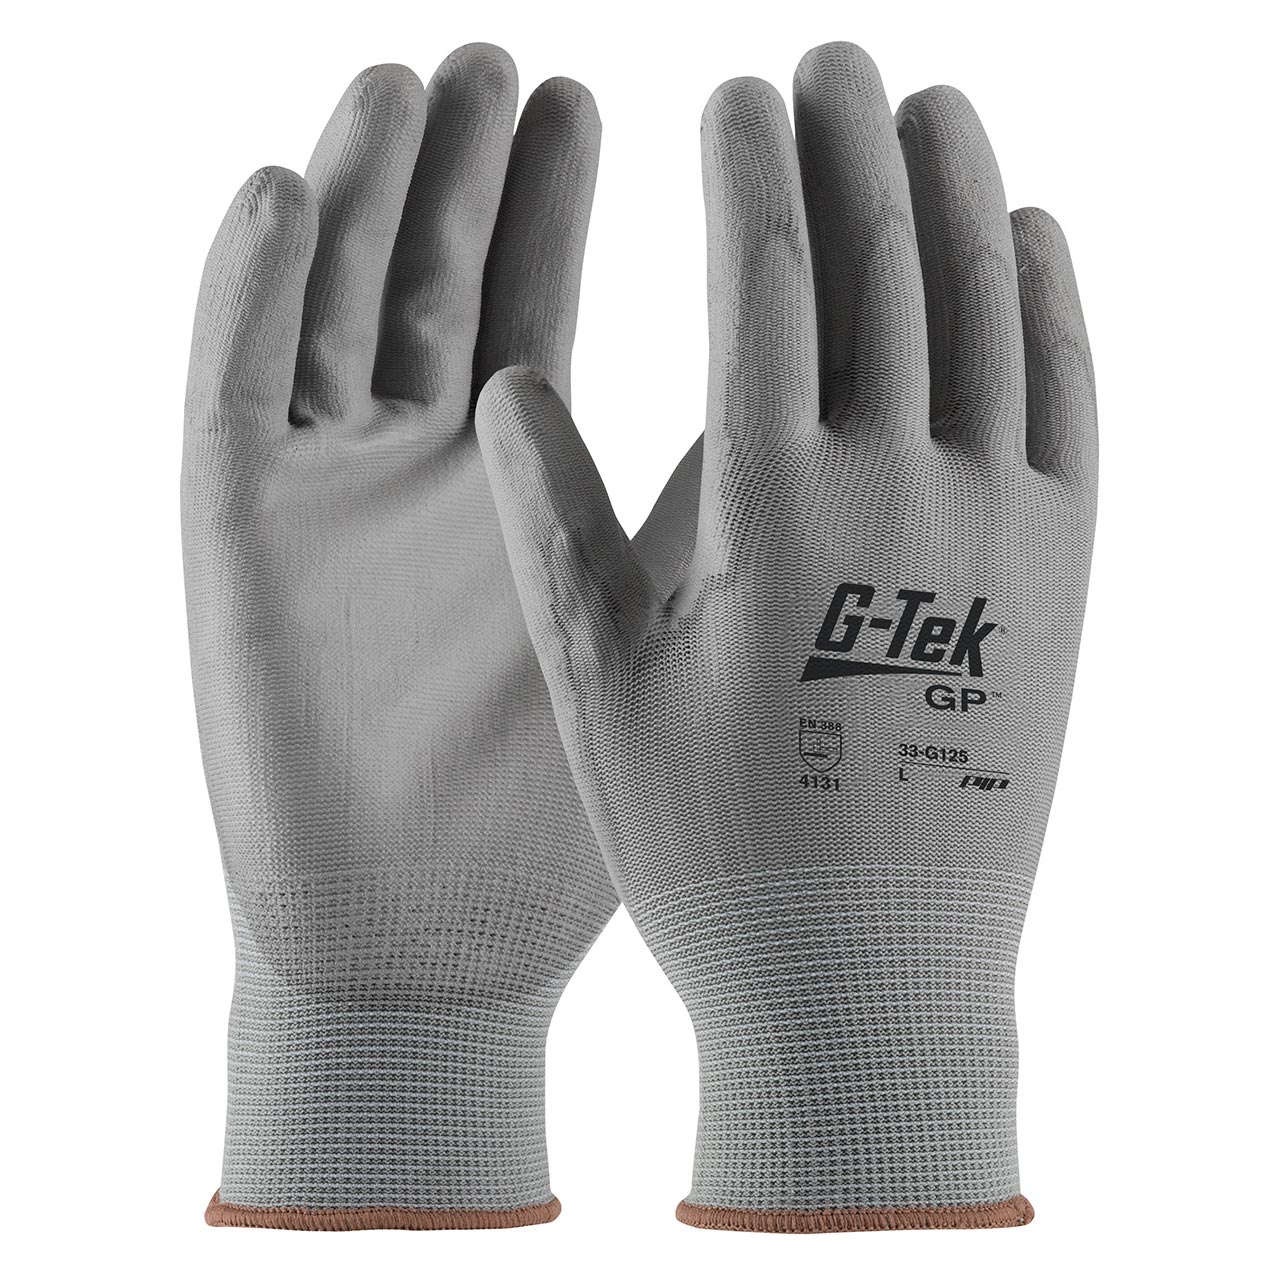 PIP 33-G125 G-Tek GP Seamless Knit Nylon Gloves - Polyurethane Coated Smooth Grip (DZ)-eSafety Supplies, Inc